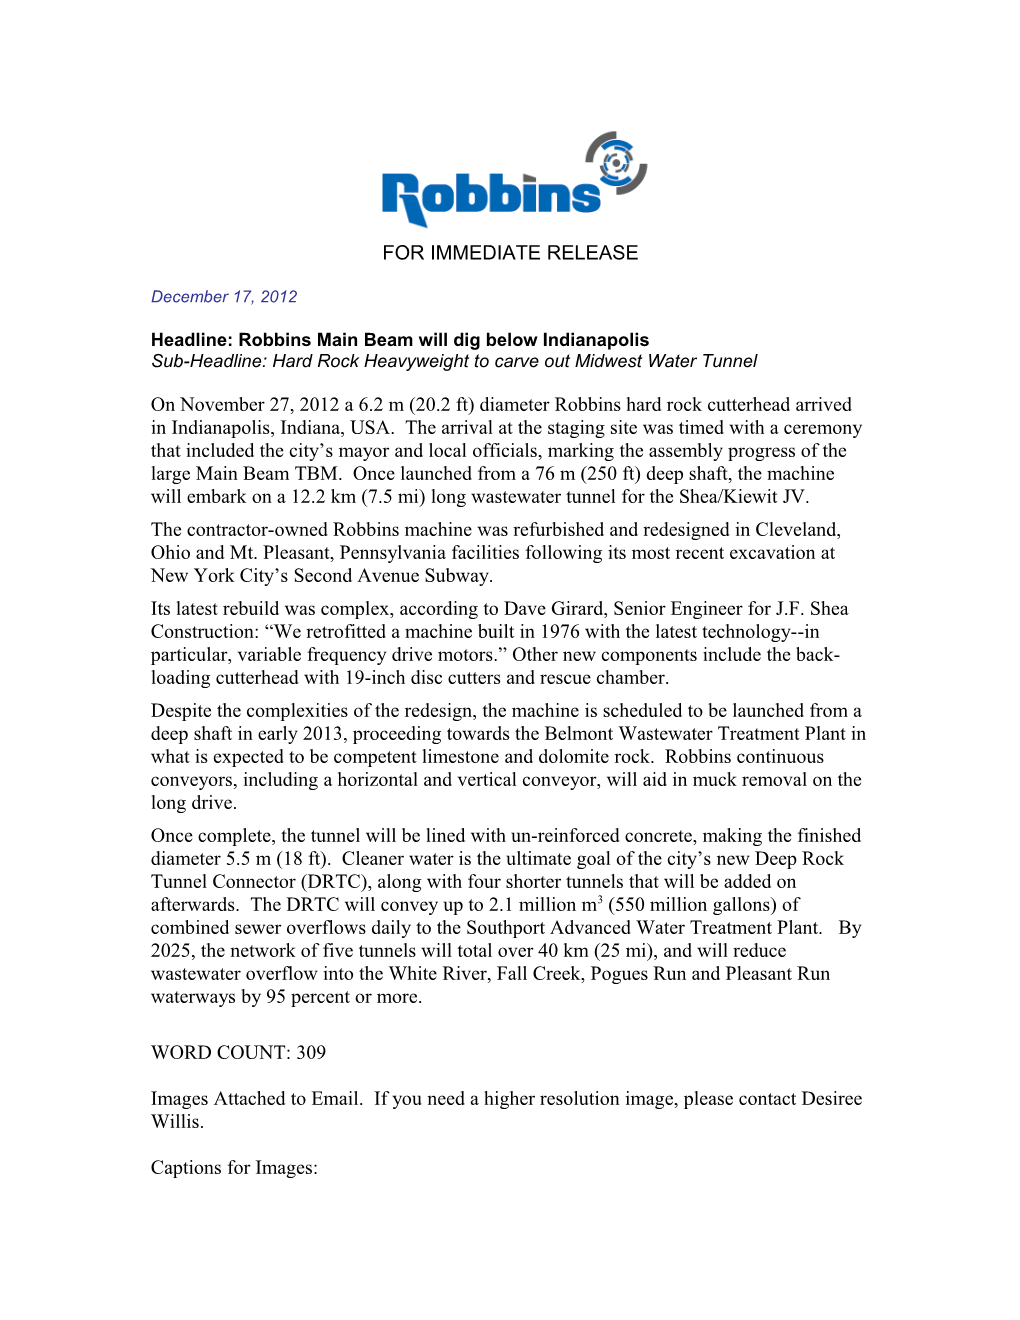 Headline:Robbins Main Beam Will Dig Below Indianapolis